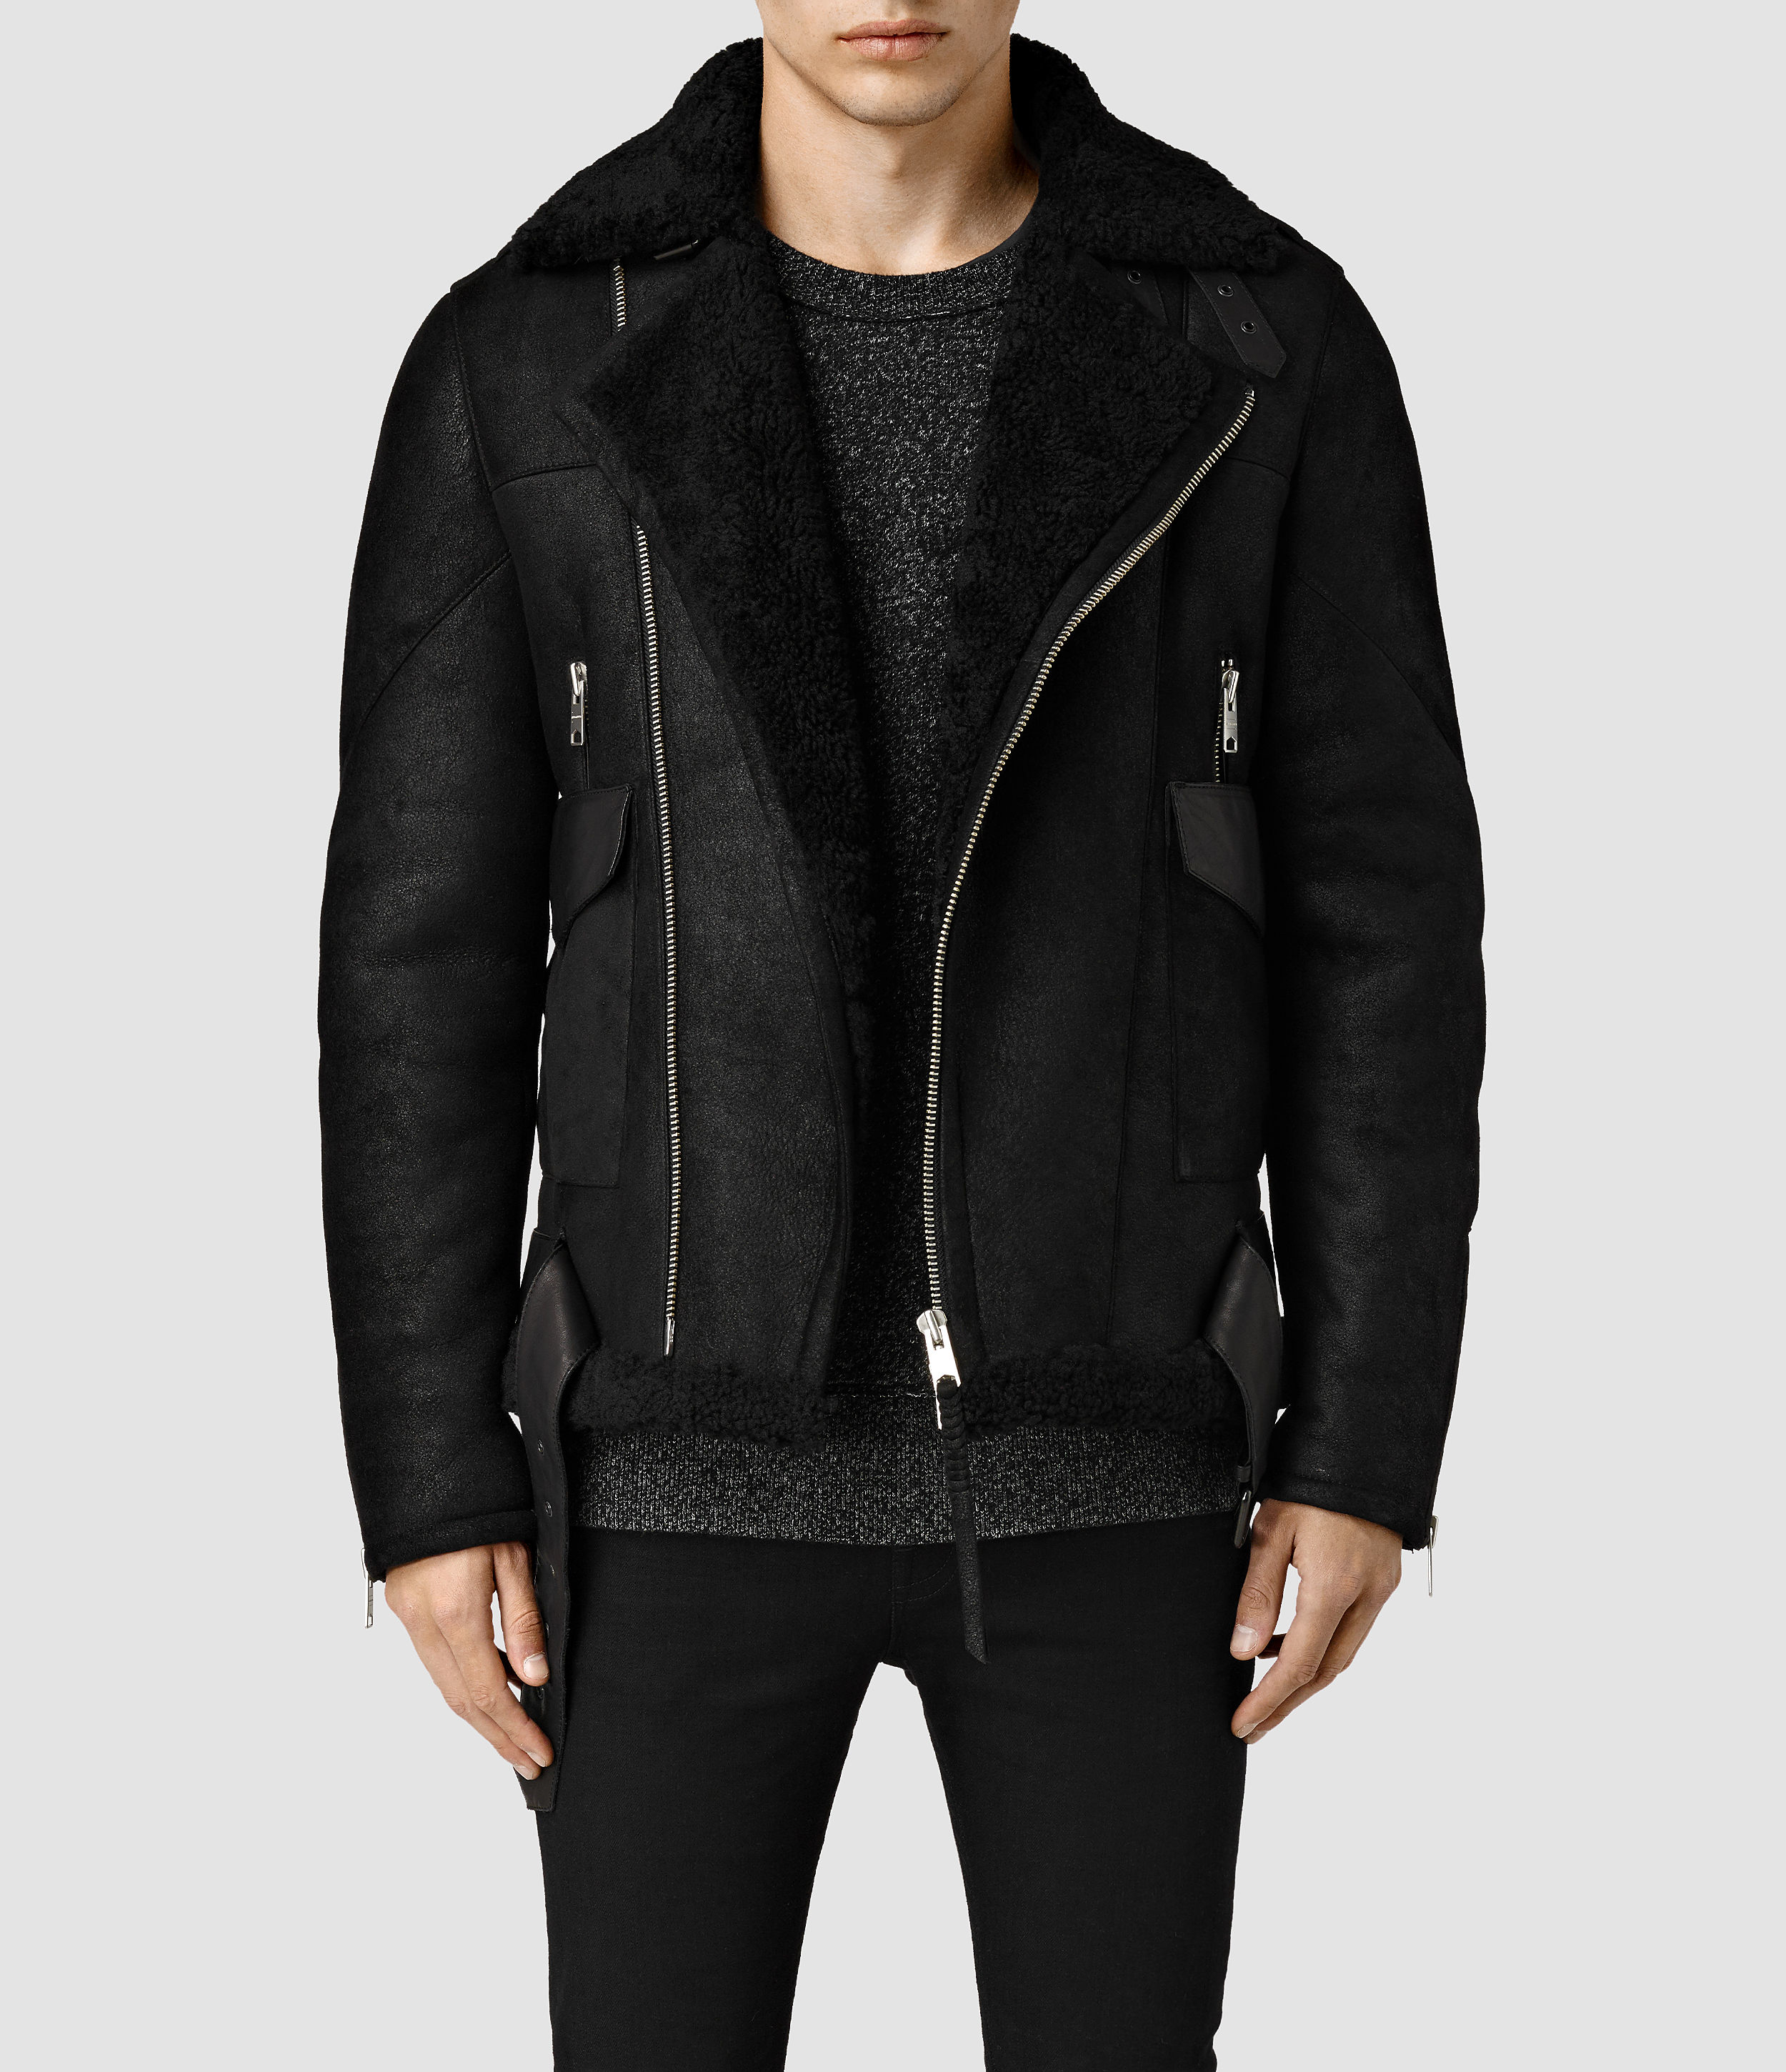 AllSaints Leather Takoma Shearling Jacket in Black for Men - Lyst